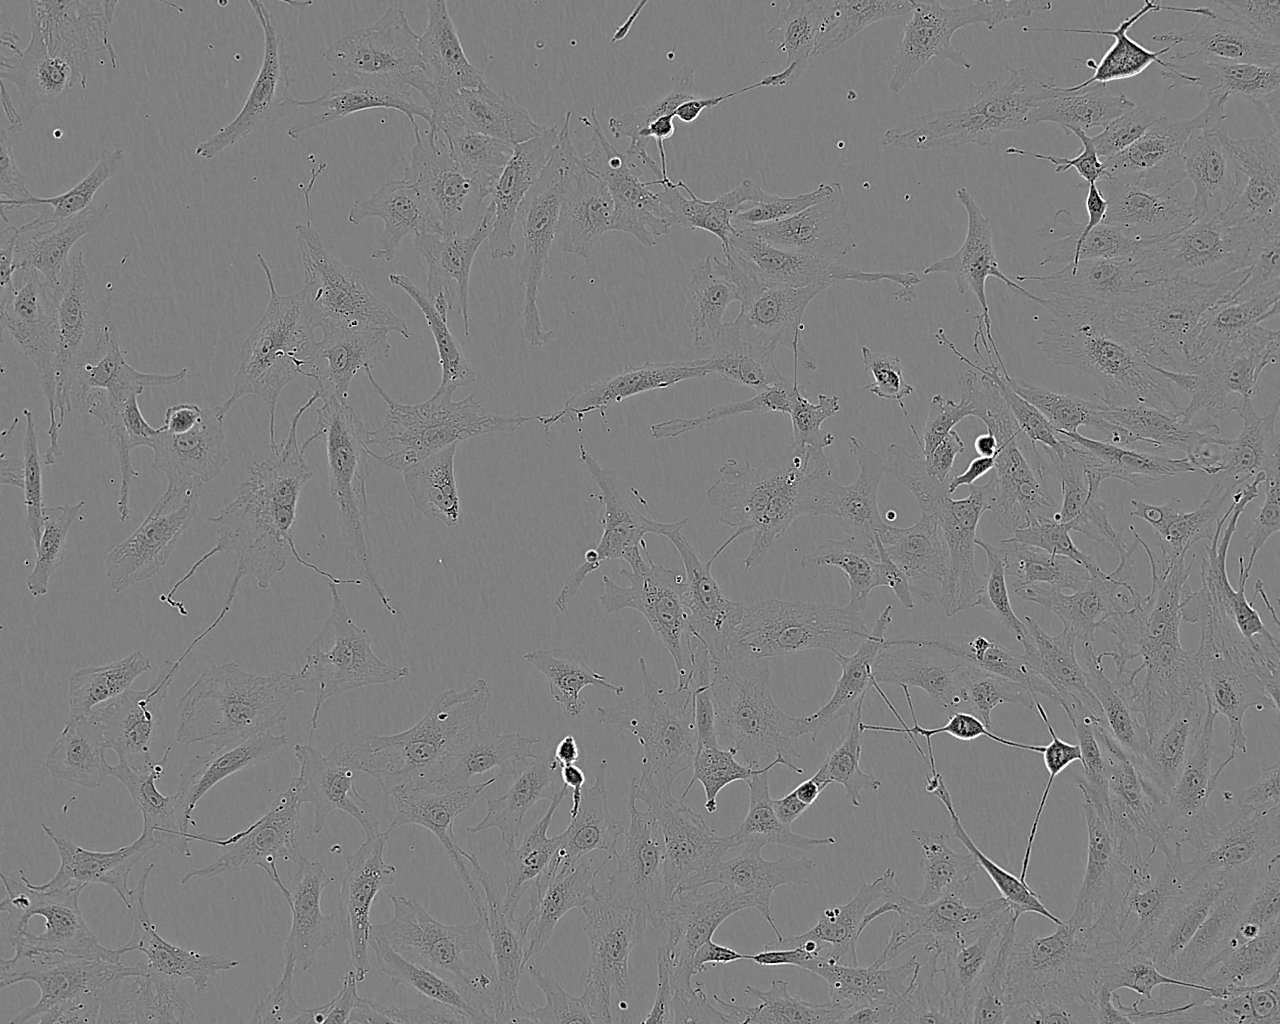 PT-K75 Cell:猪鼻甲黏膜成纤维细胞系